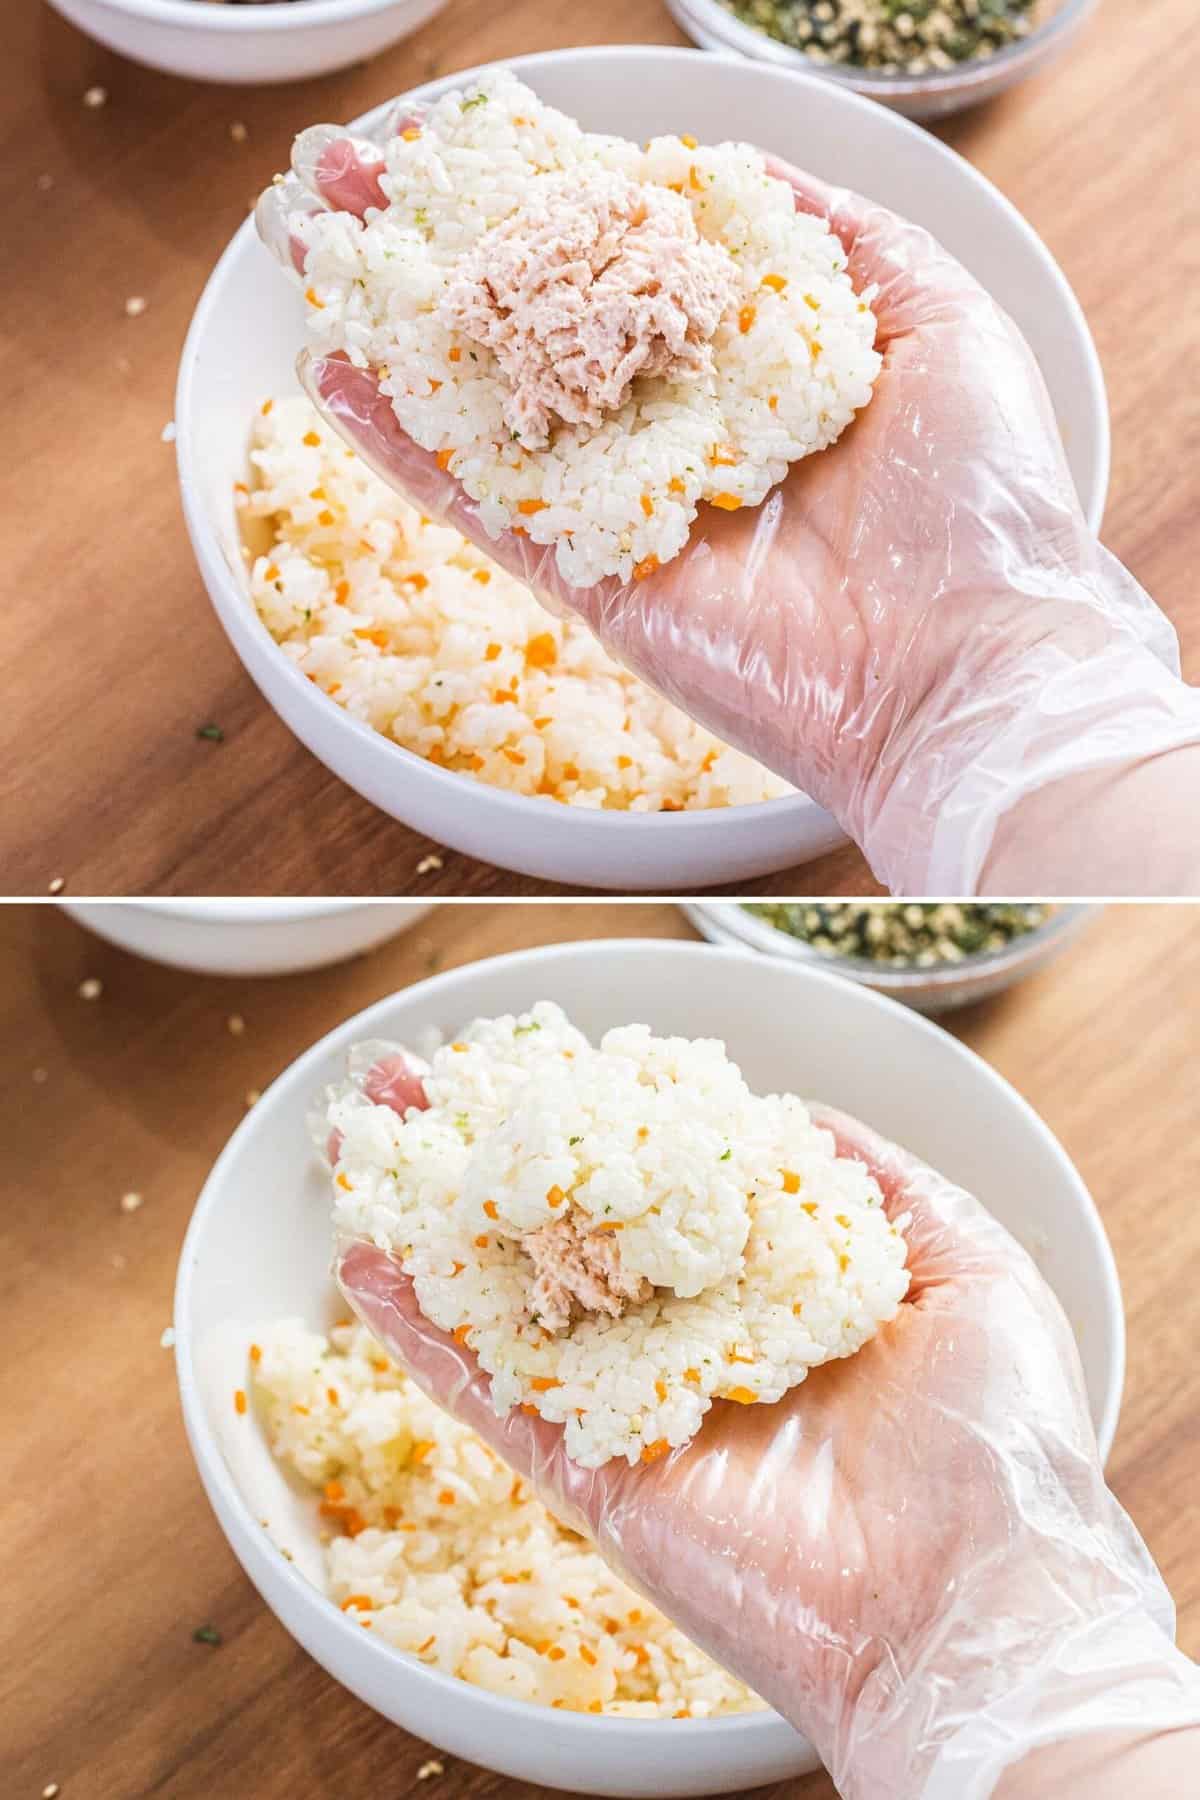 Tuna mayo filling added to Korean rice balls.